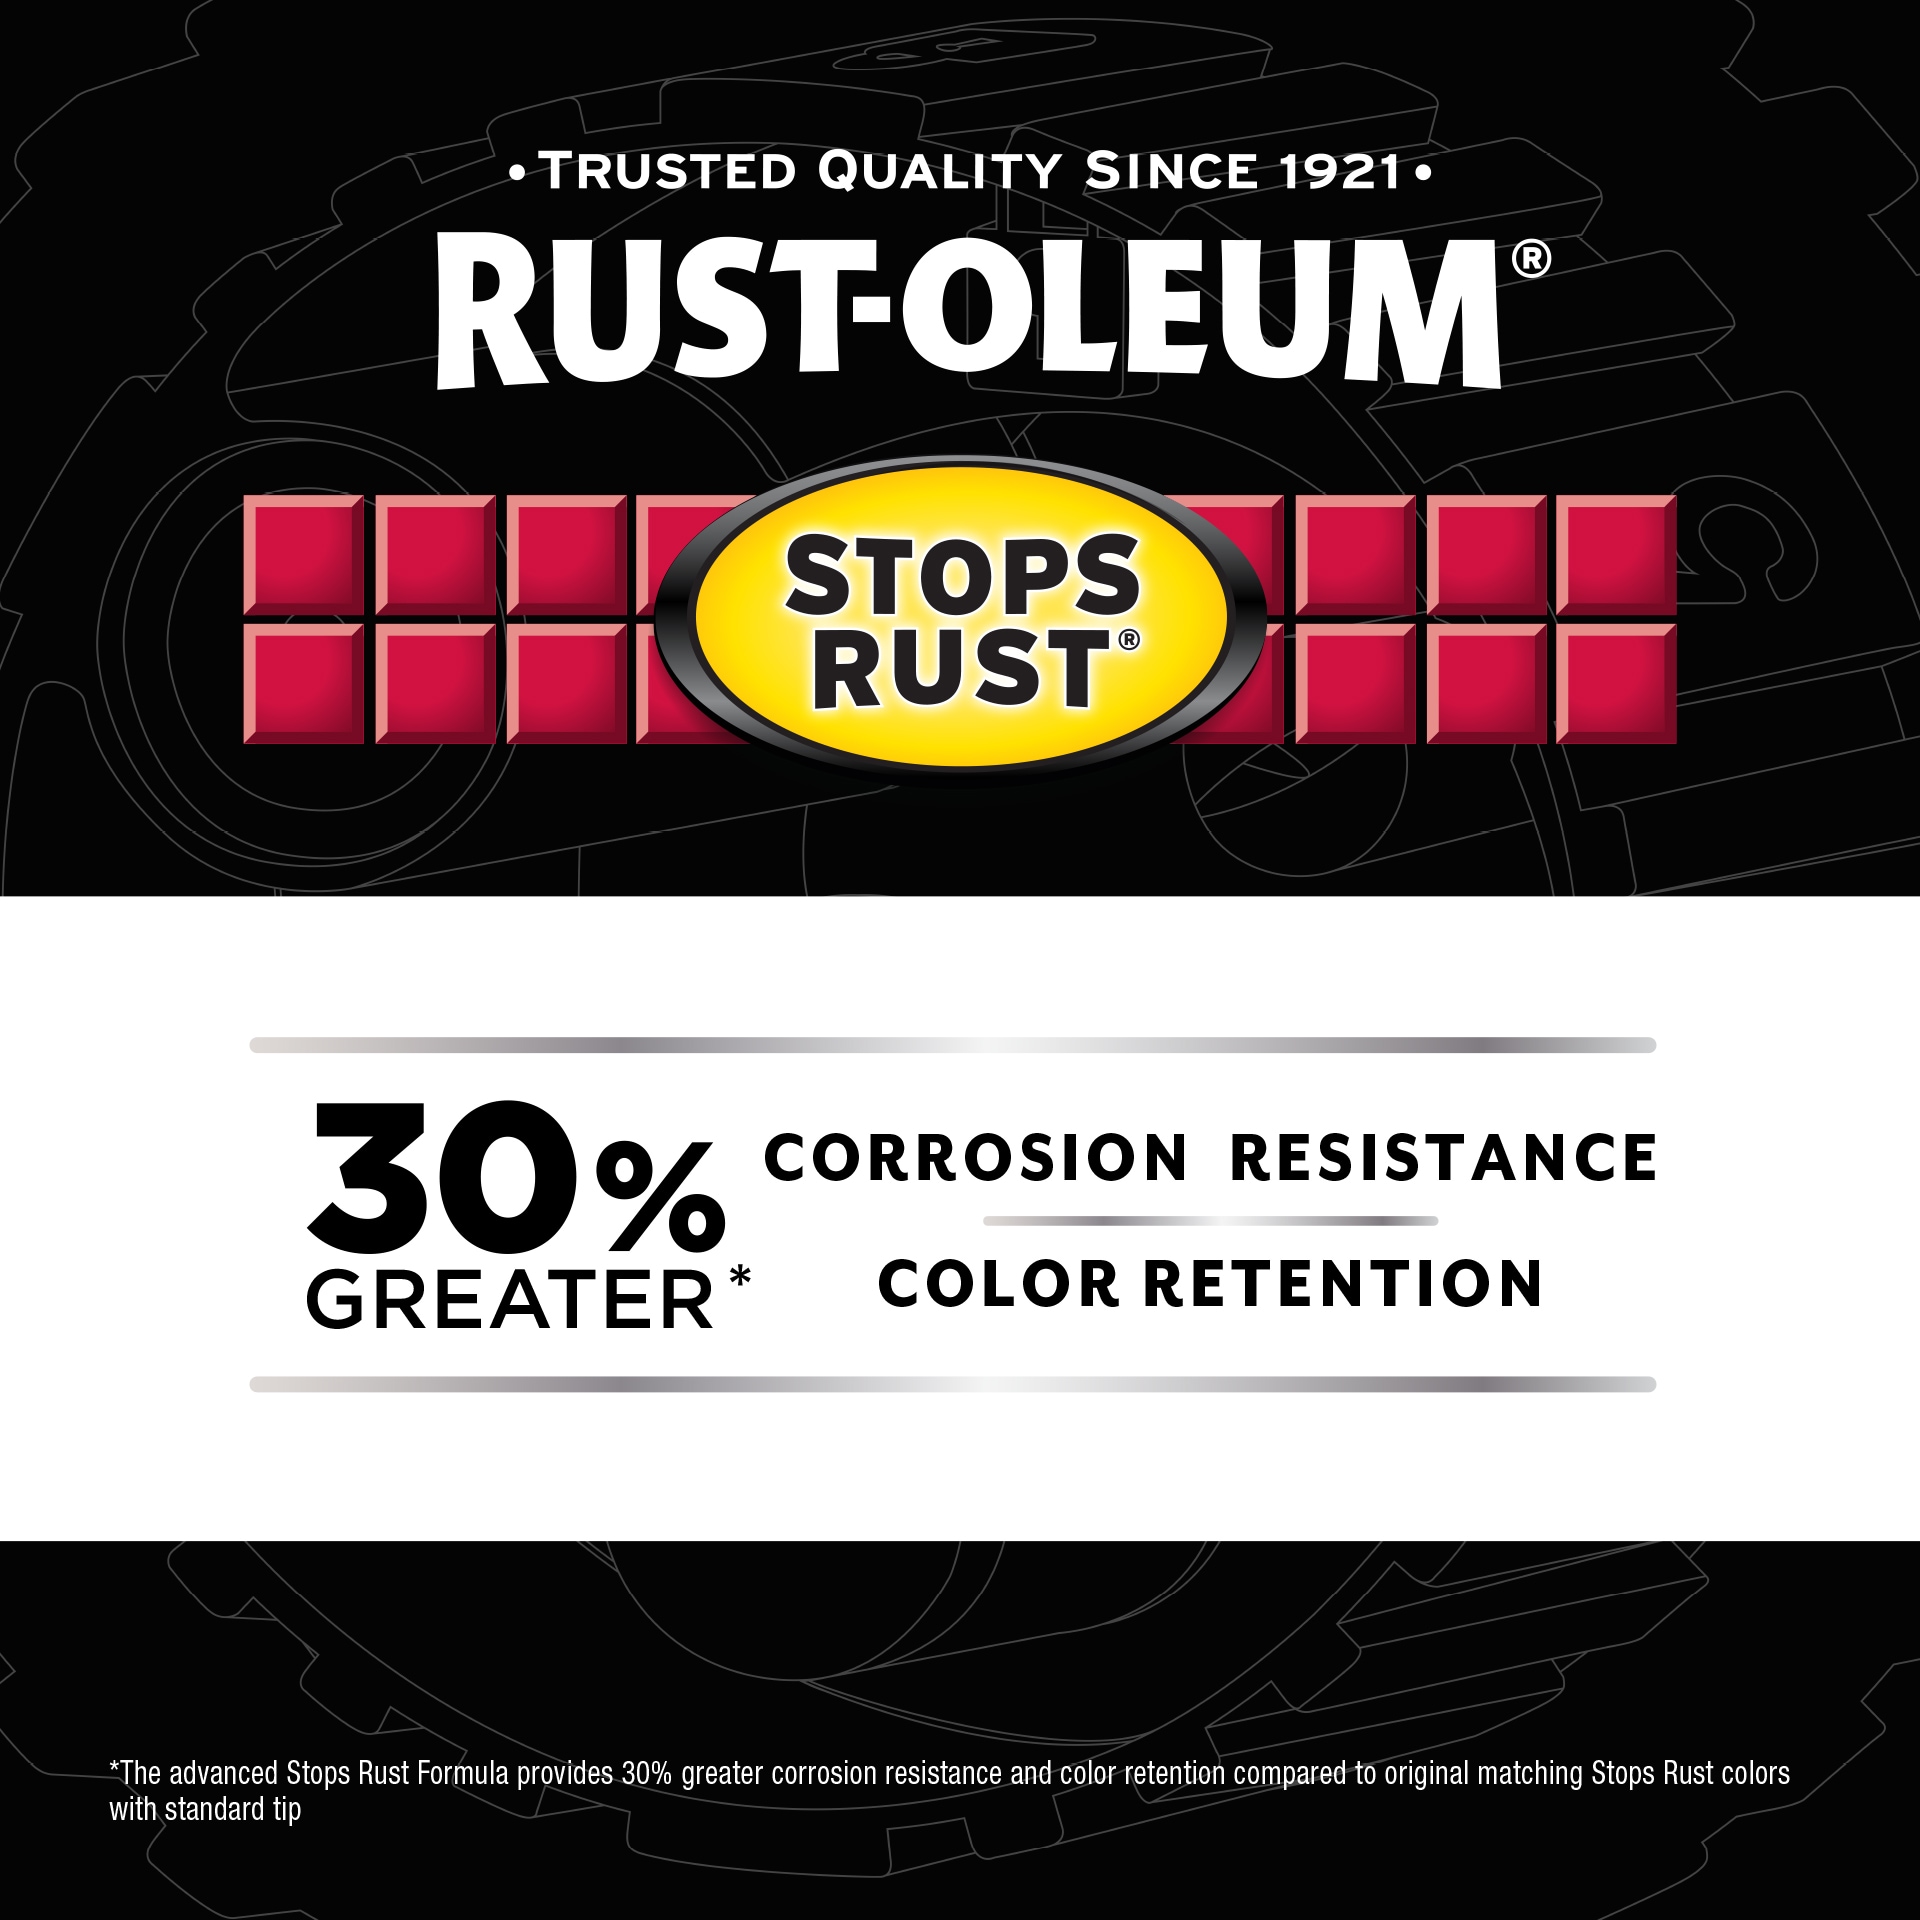 Rust-Oleum Specialty Matte Navy Spray Paint (NET WT. 12-oz) in the